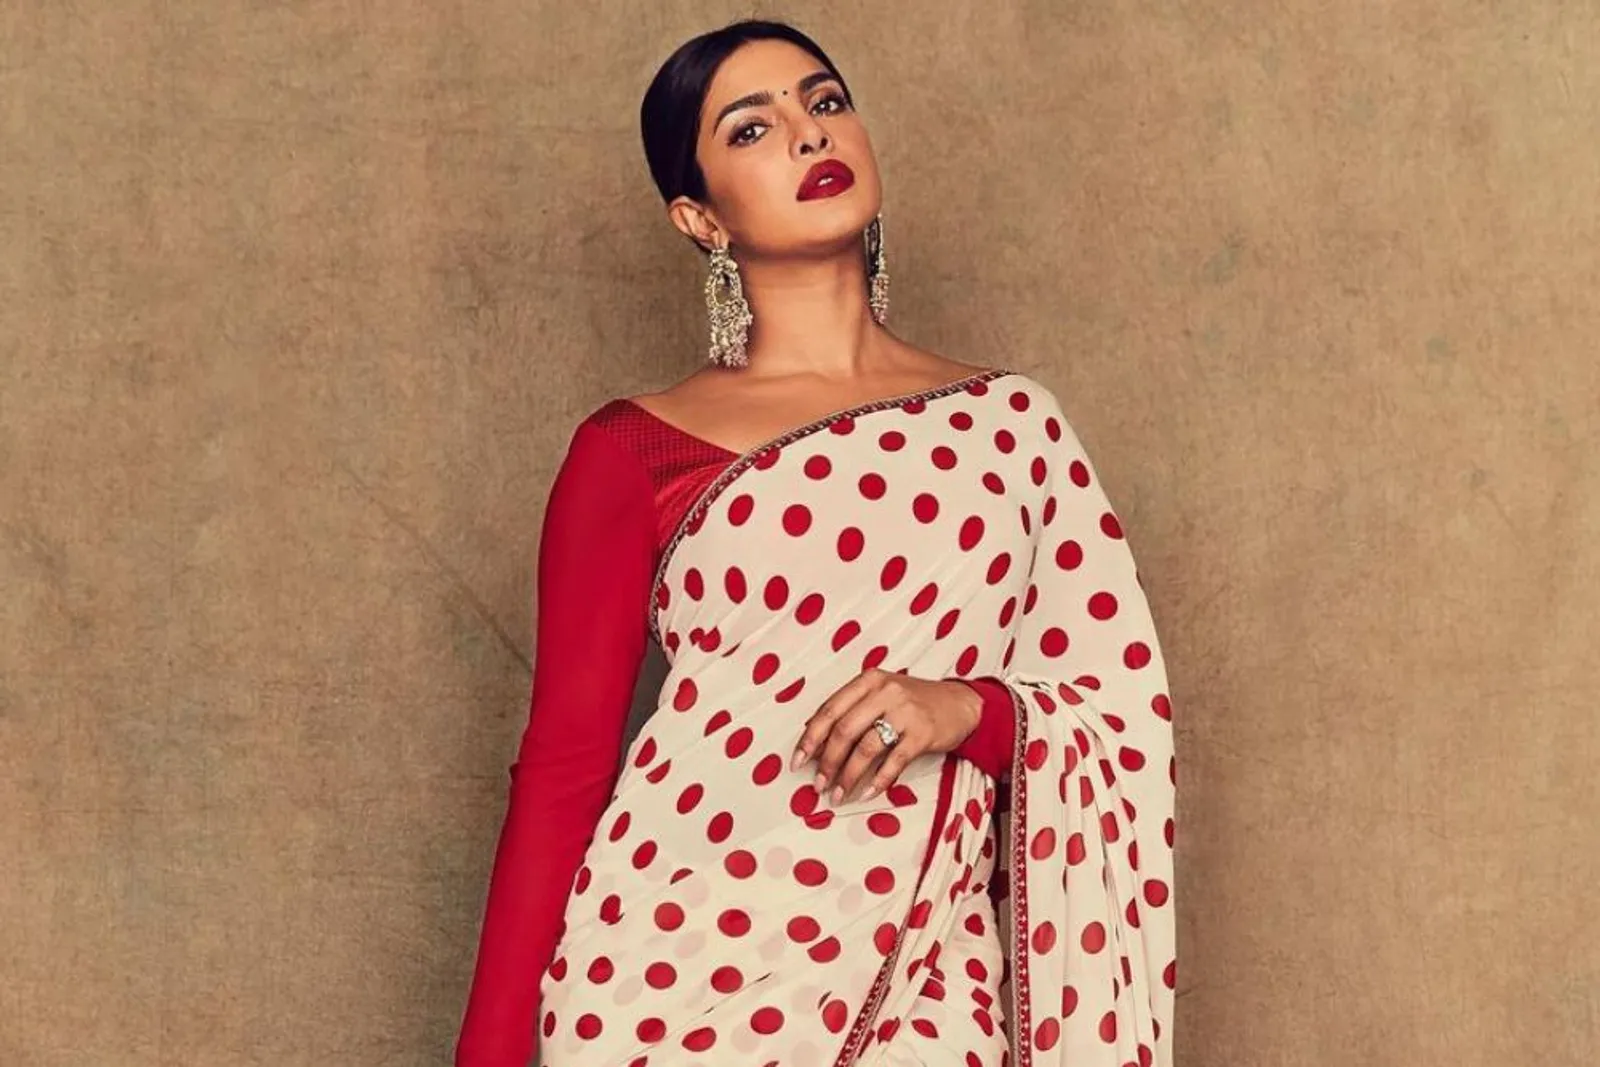 Potret Seksi Priyanka Chopra Dalam Balutan Baju Tradisional India 